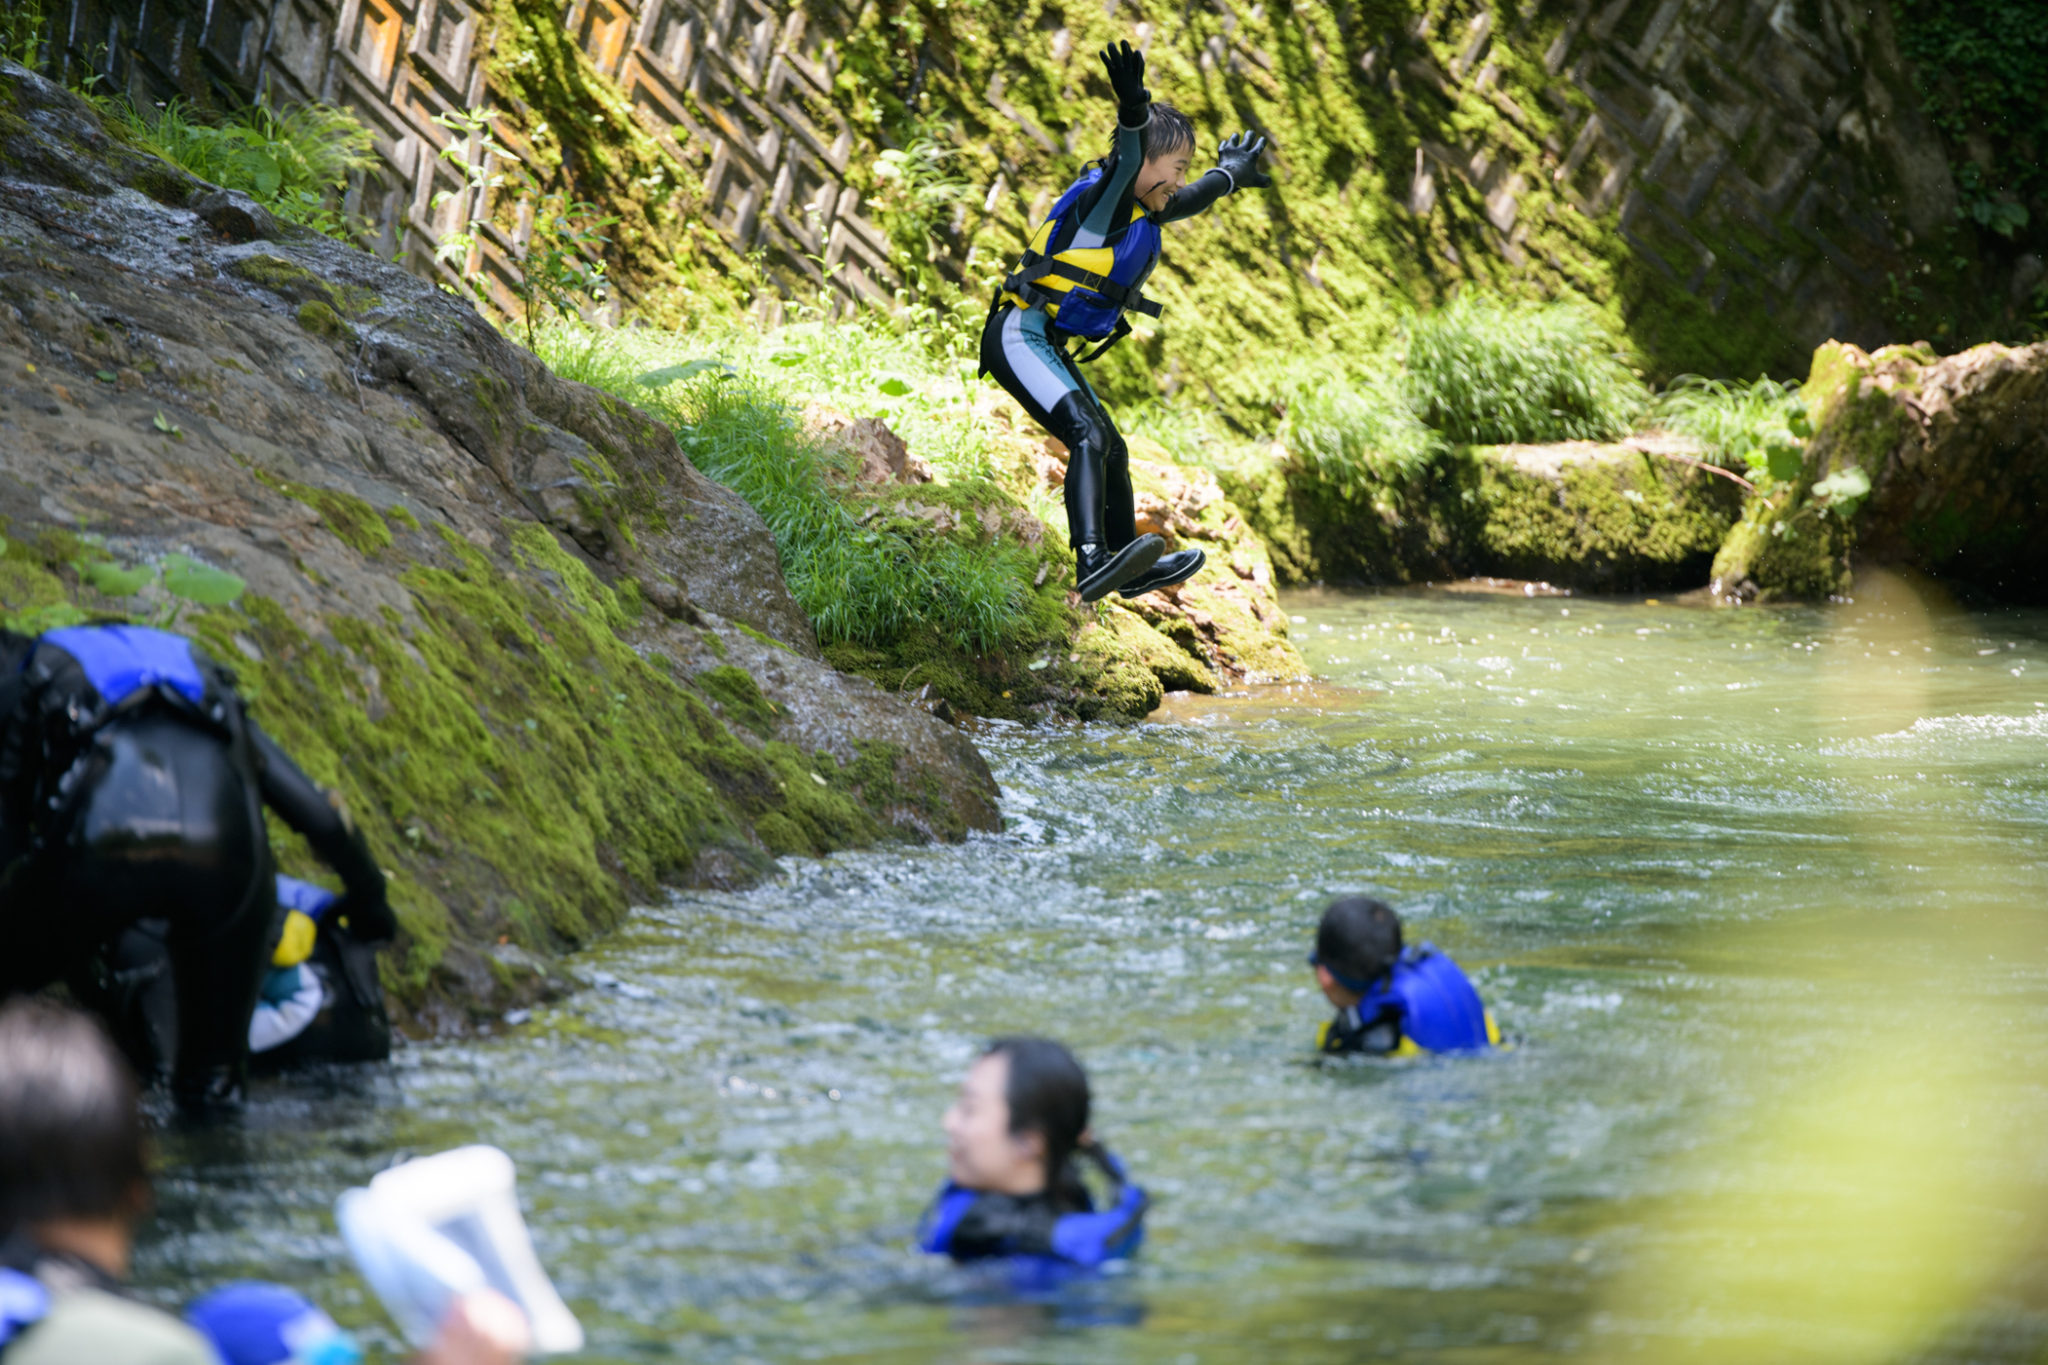 [Activity] River Trekking! Refreshing great nature during hot summer